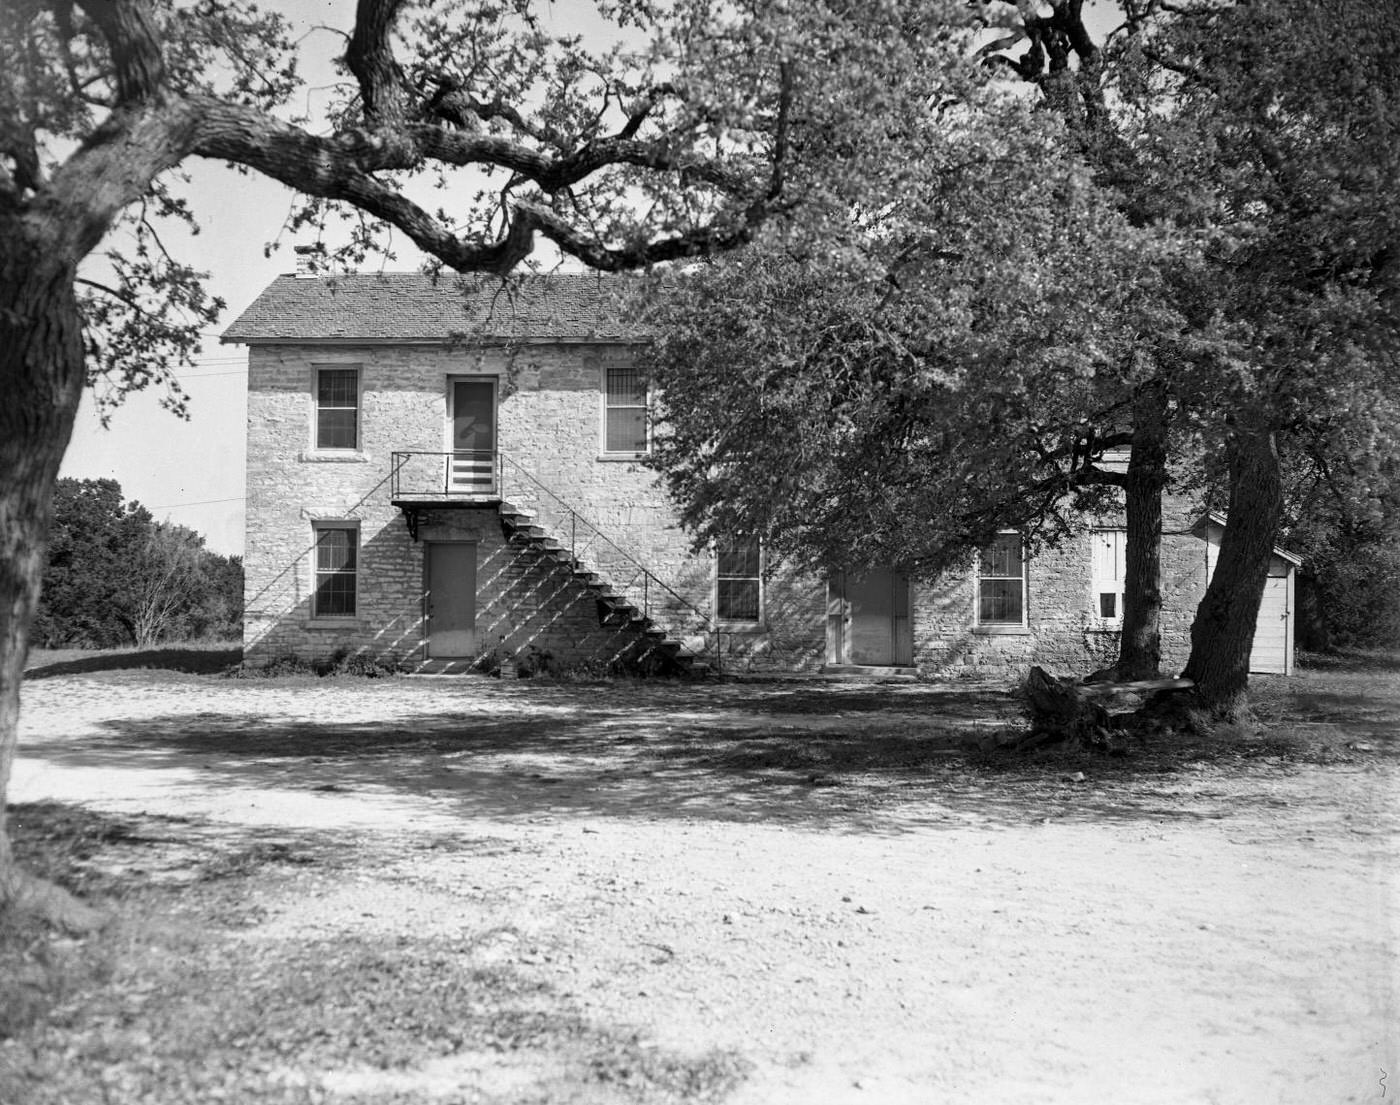 Pleasant Hill Old School Building at Onion Creek, 1950.